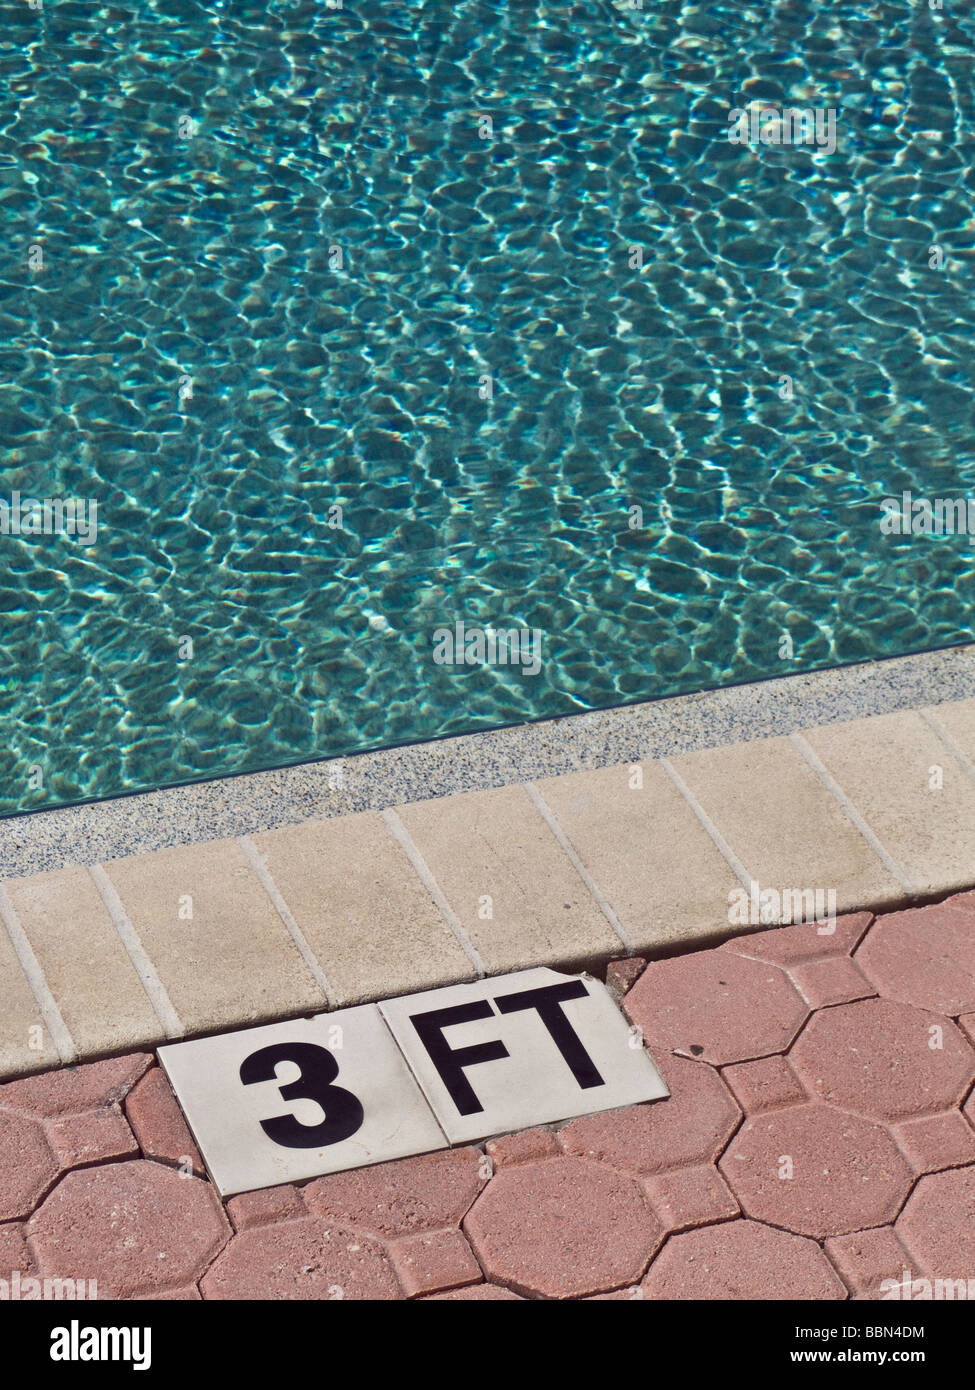 depth markings for pool Stock Photo